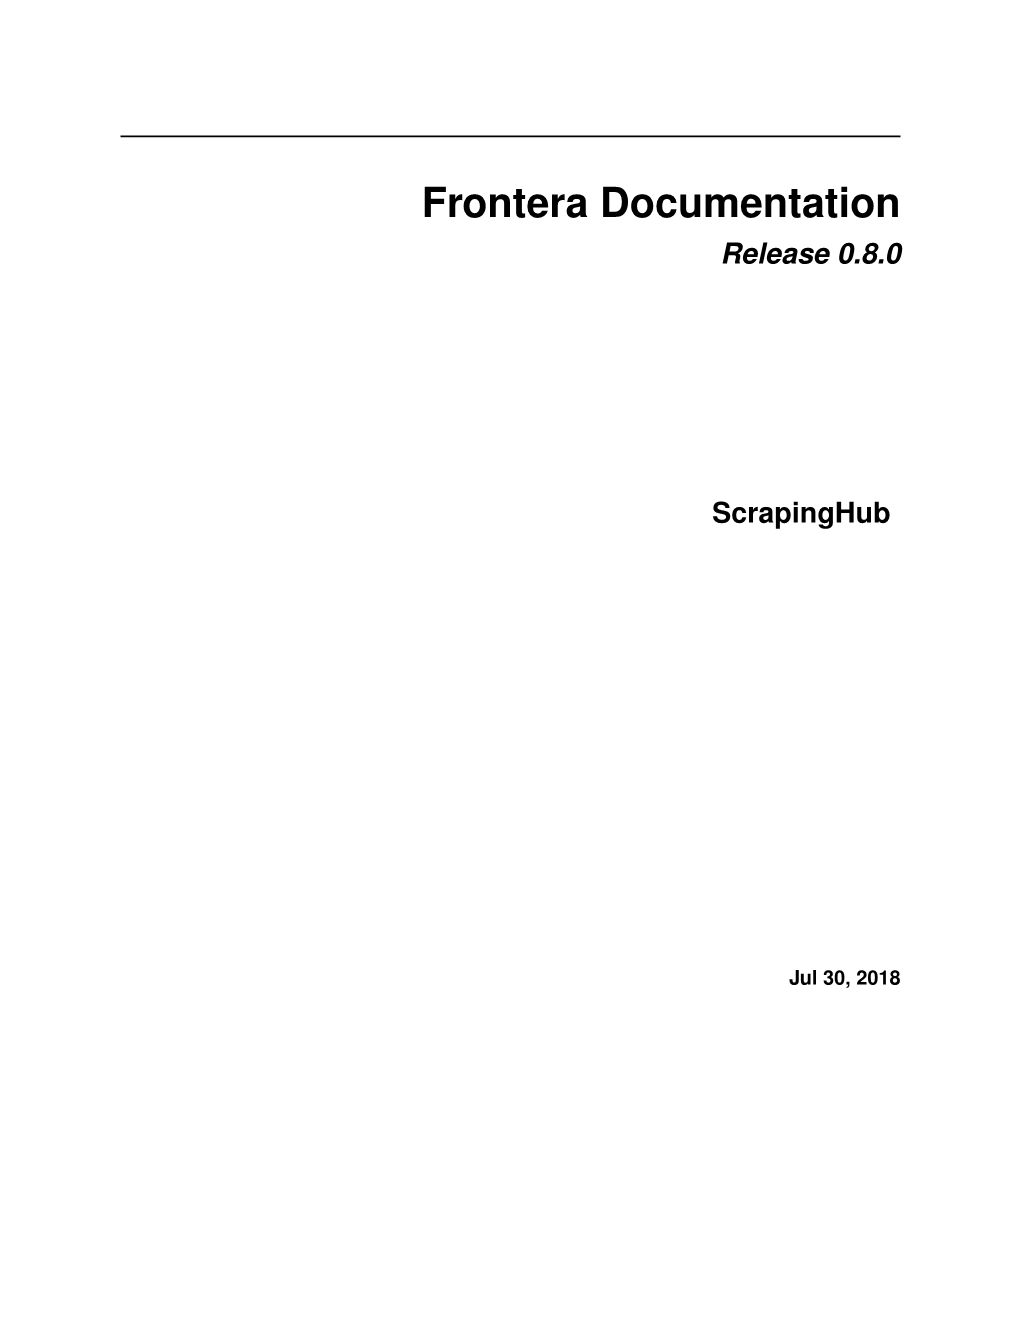 Frontera Documentation Release 0.8.0